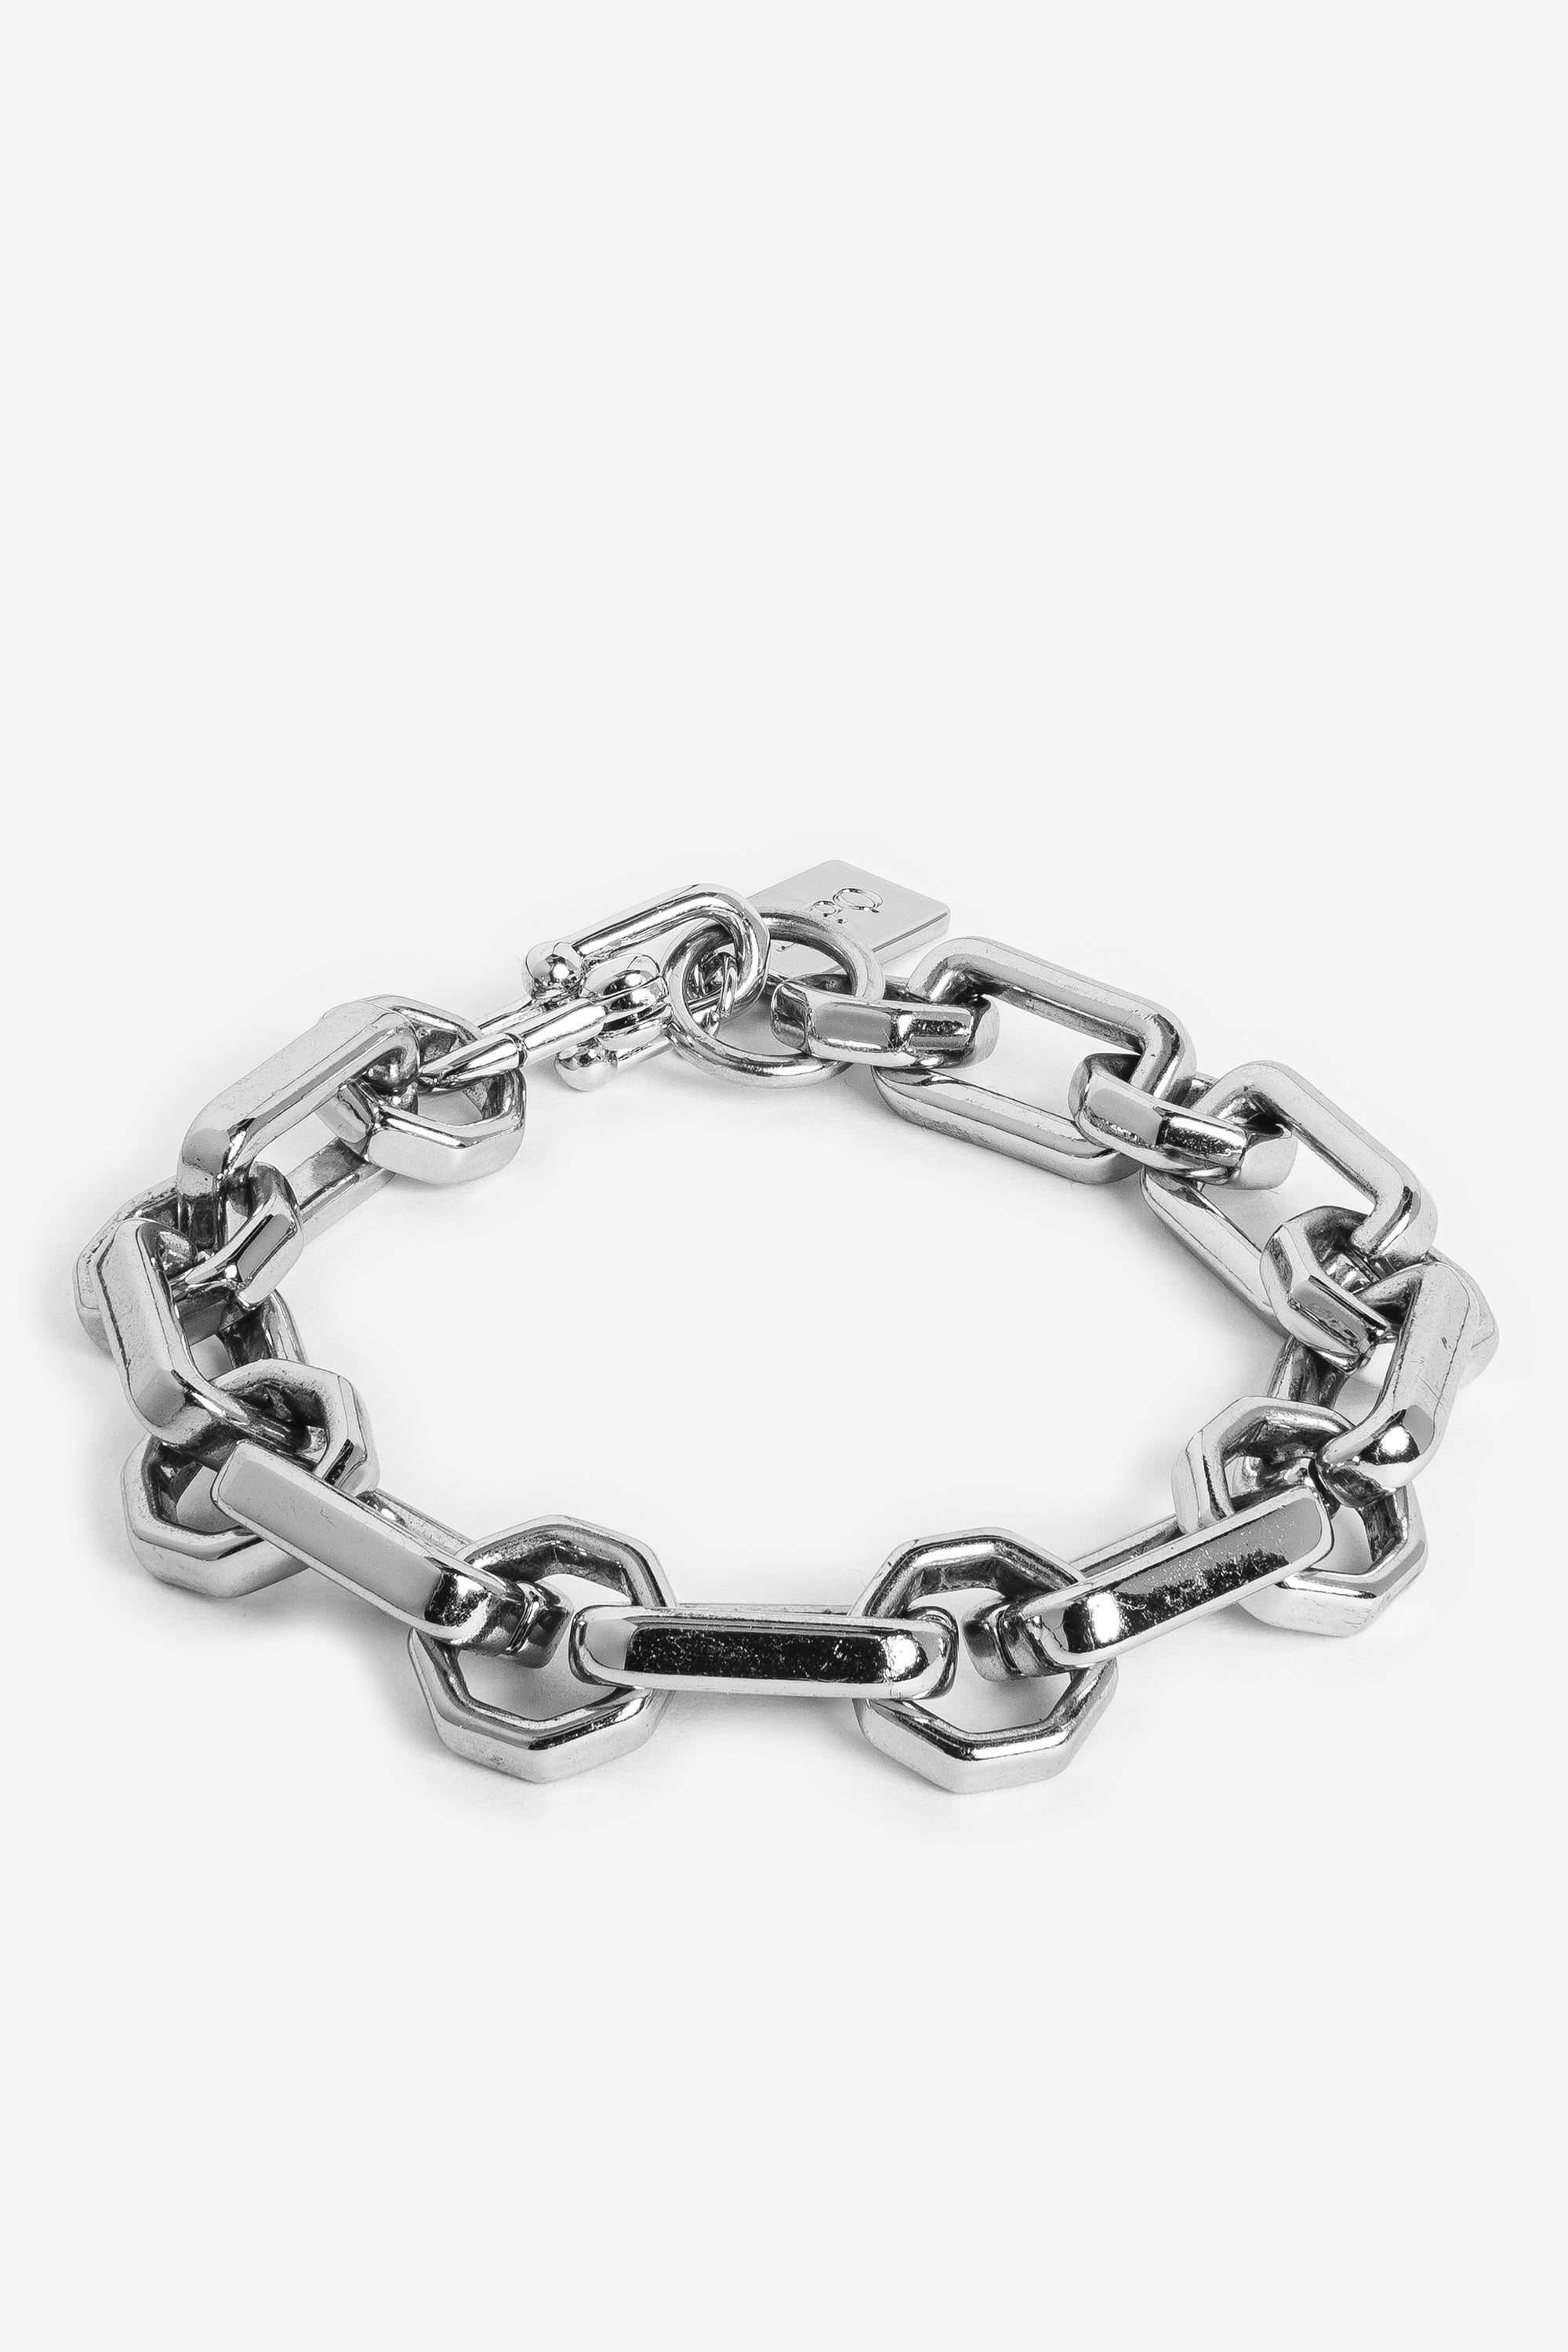 Himalia Silver Bracelet